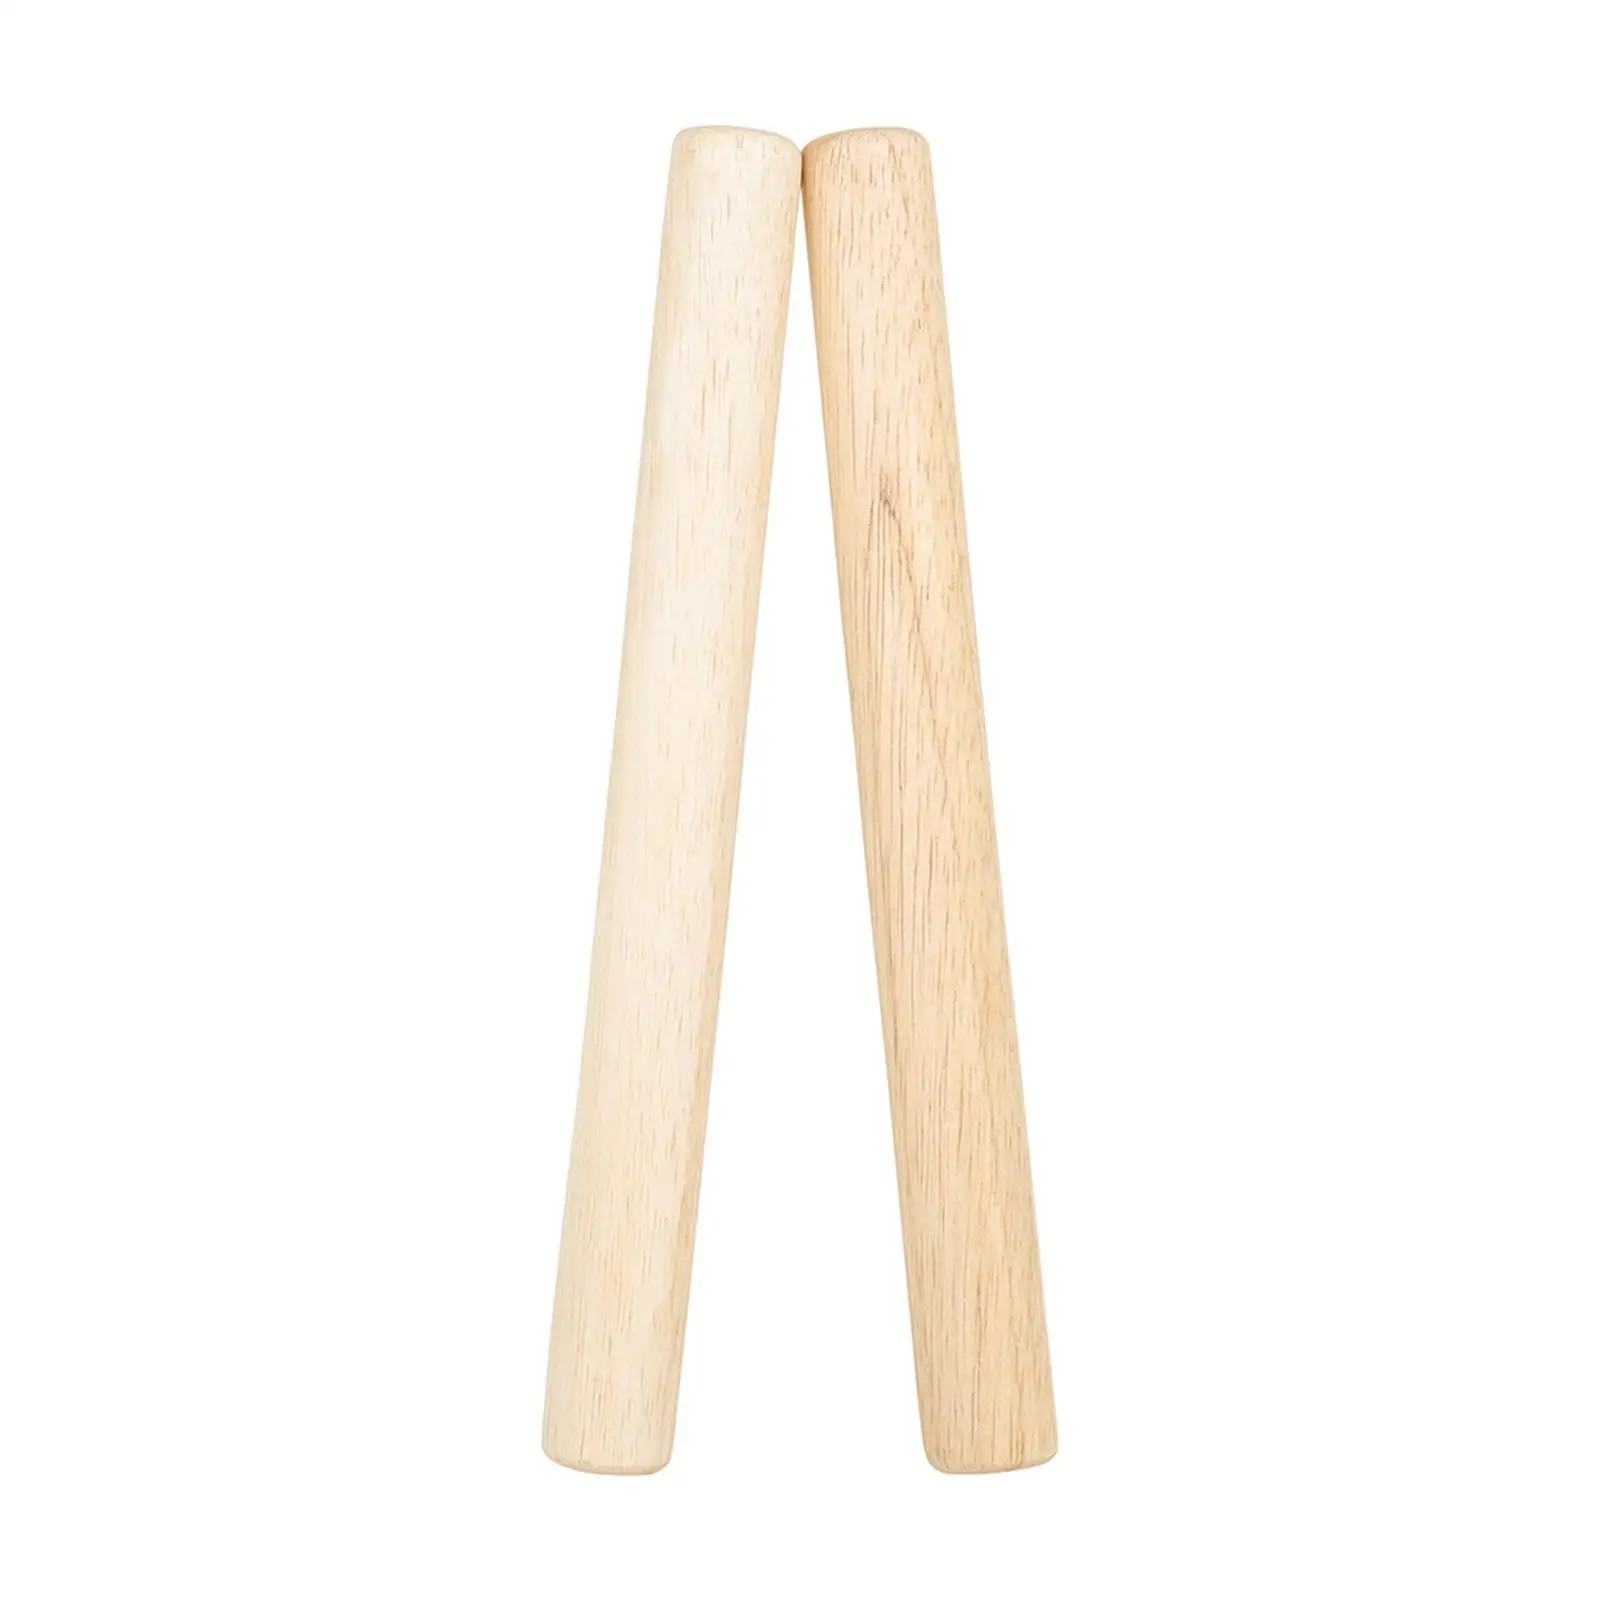 2Pcs Wooden Drum Sticks Musical Toy Preschool Learning Education Toy Drum Sticks for Children